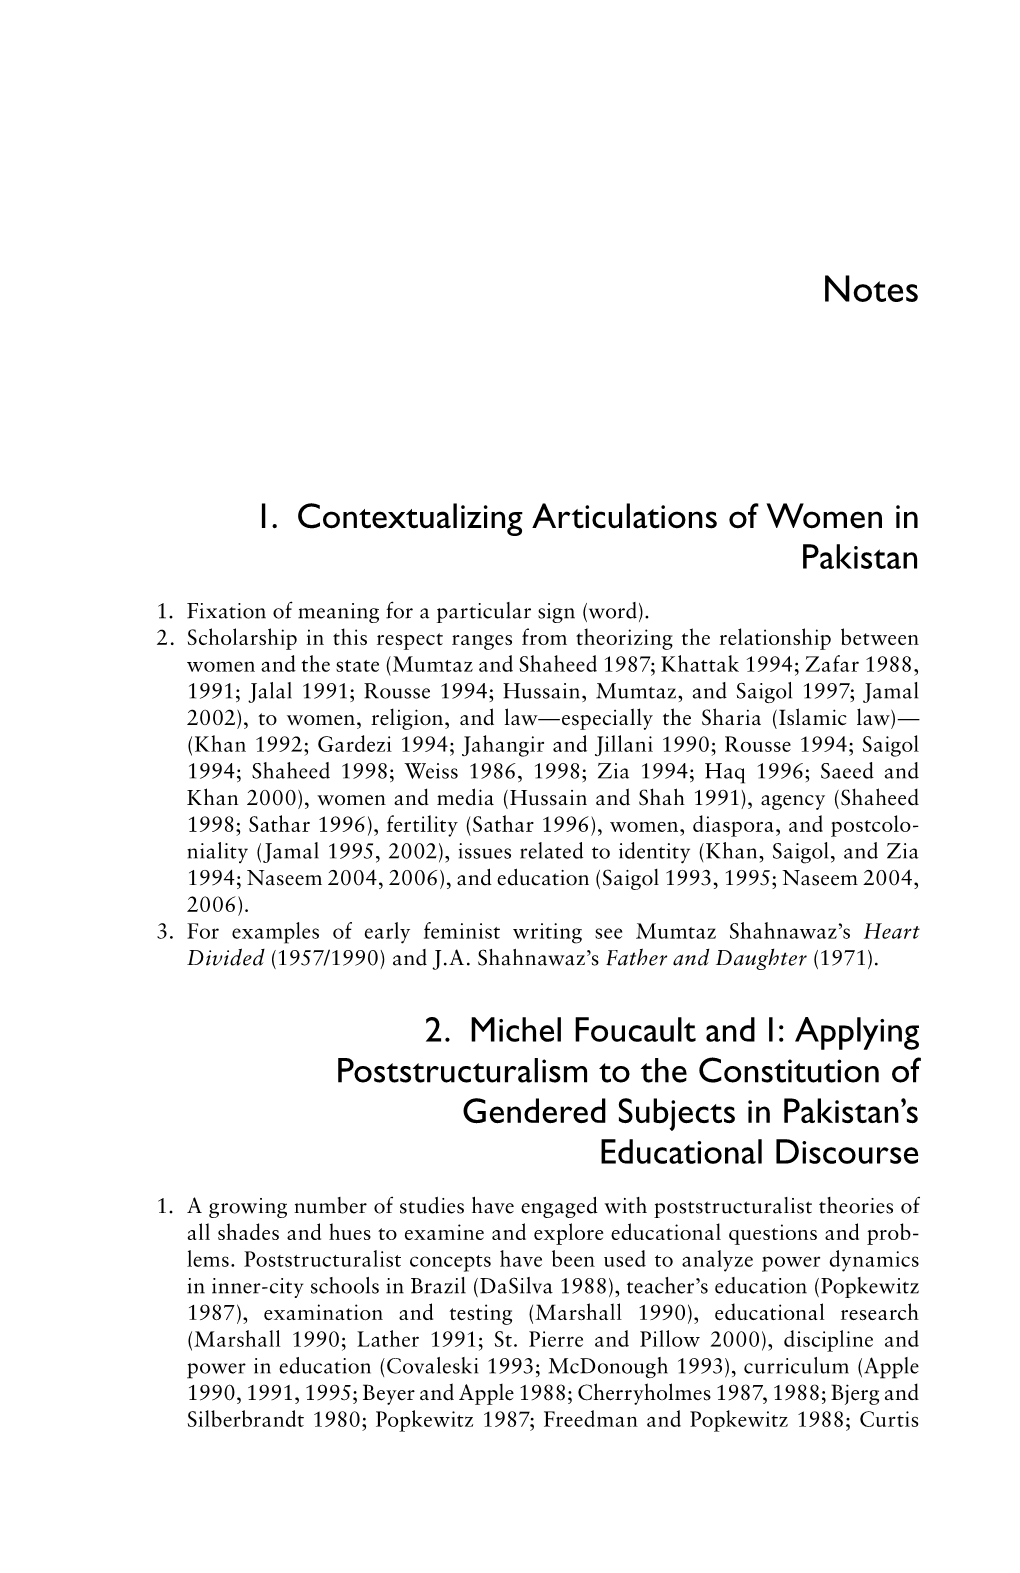 1. Contextualizing Articulations of Women in Pakistan 2. Michel